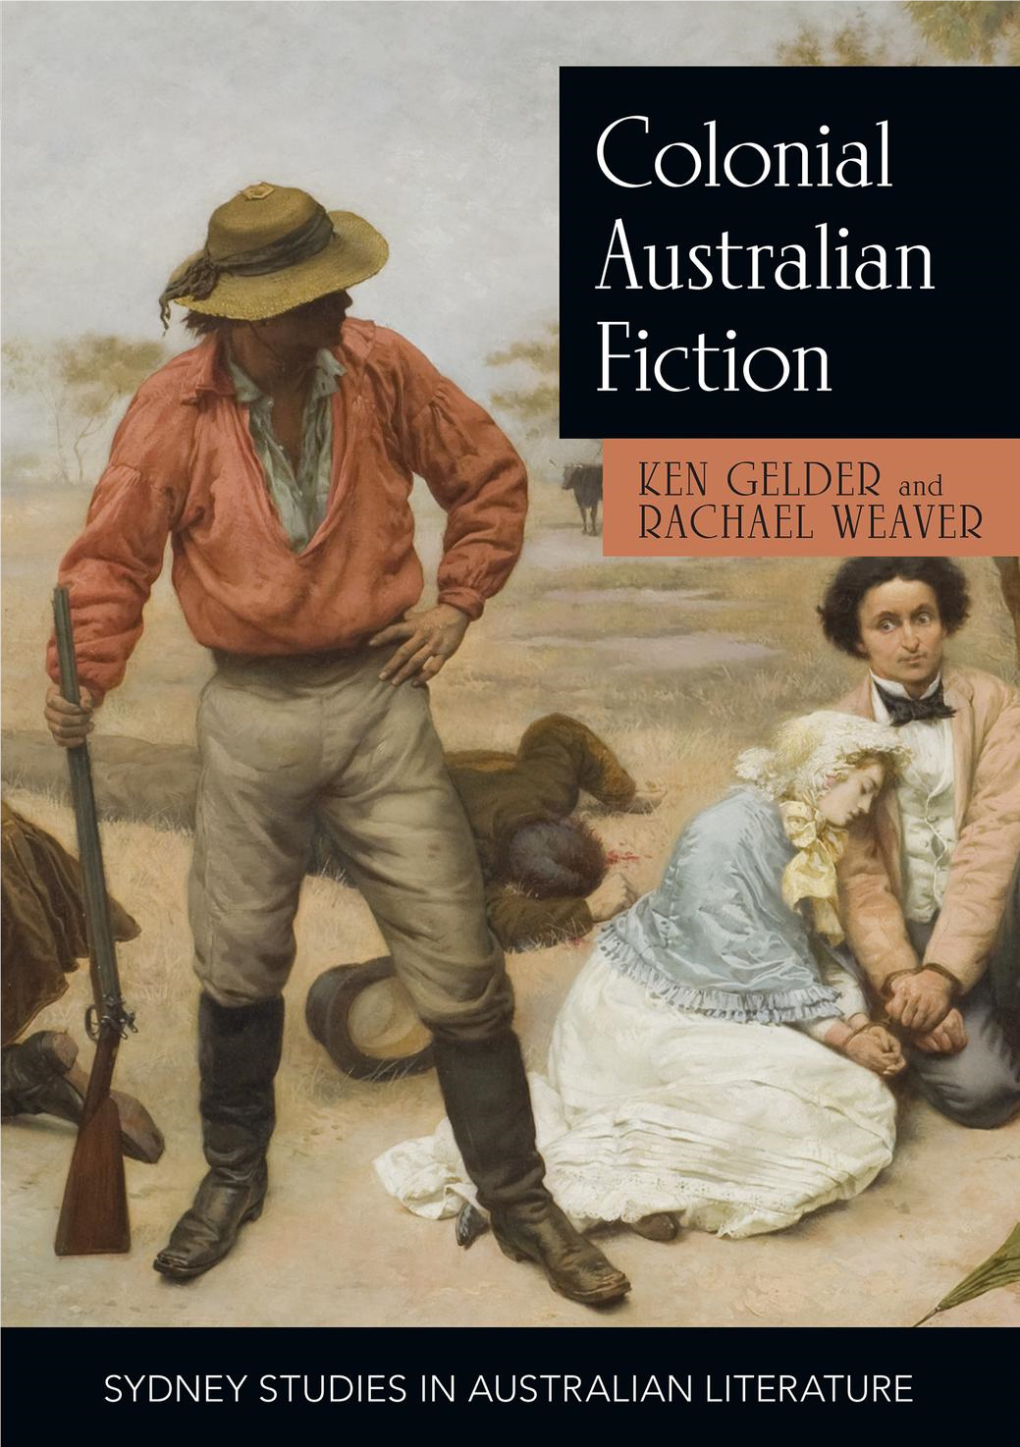 Colonial Australian Fiction, Published by Sydney University Press